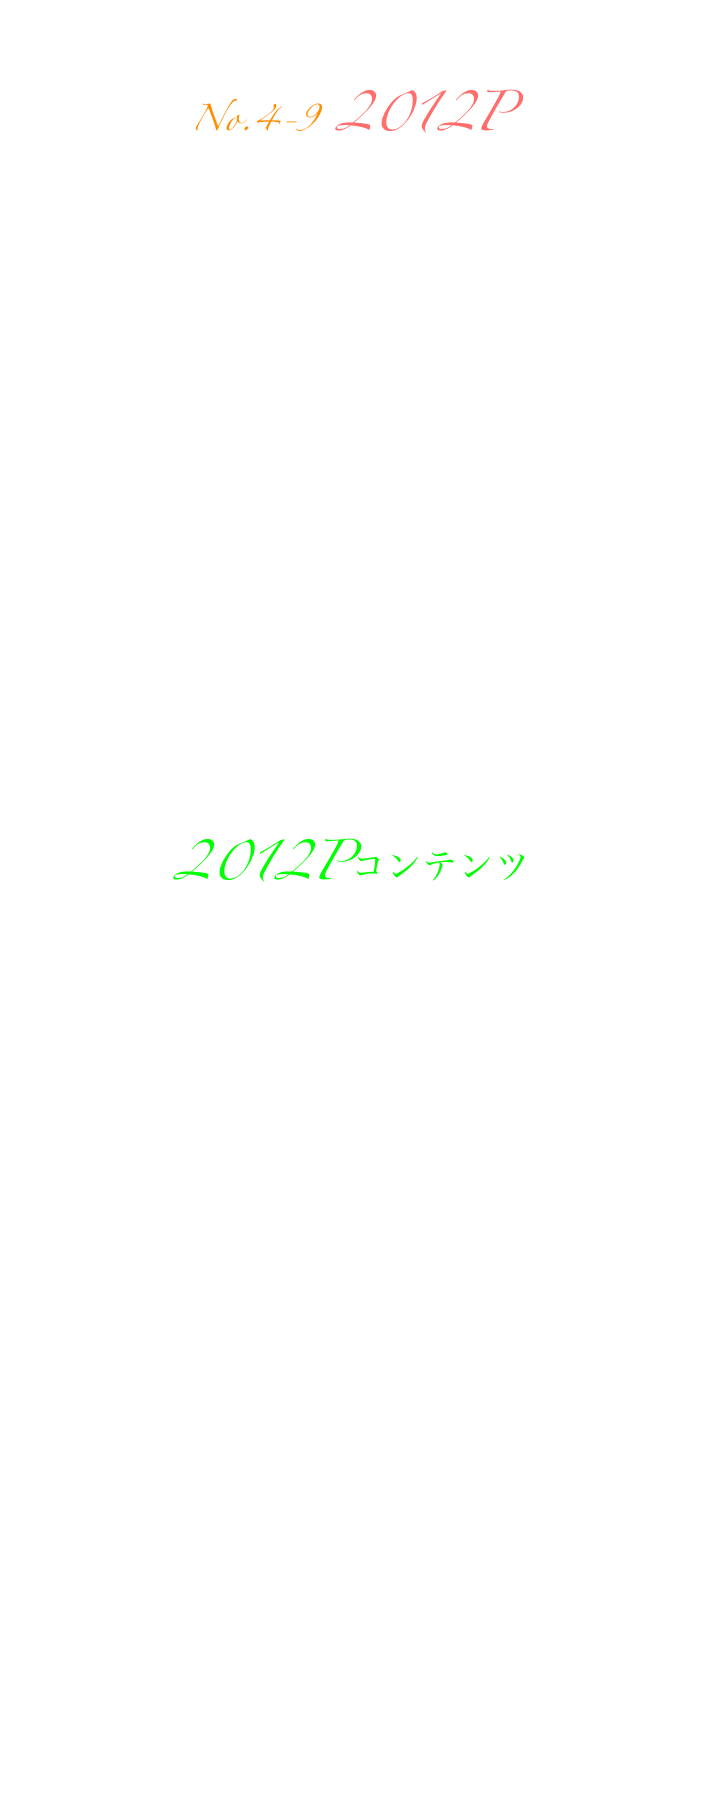 
No.4-9 2012P





2012年アセンション日記
2012Pコンテンツ
アセンション日記2012MAX版



戻る